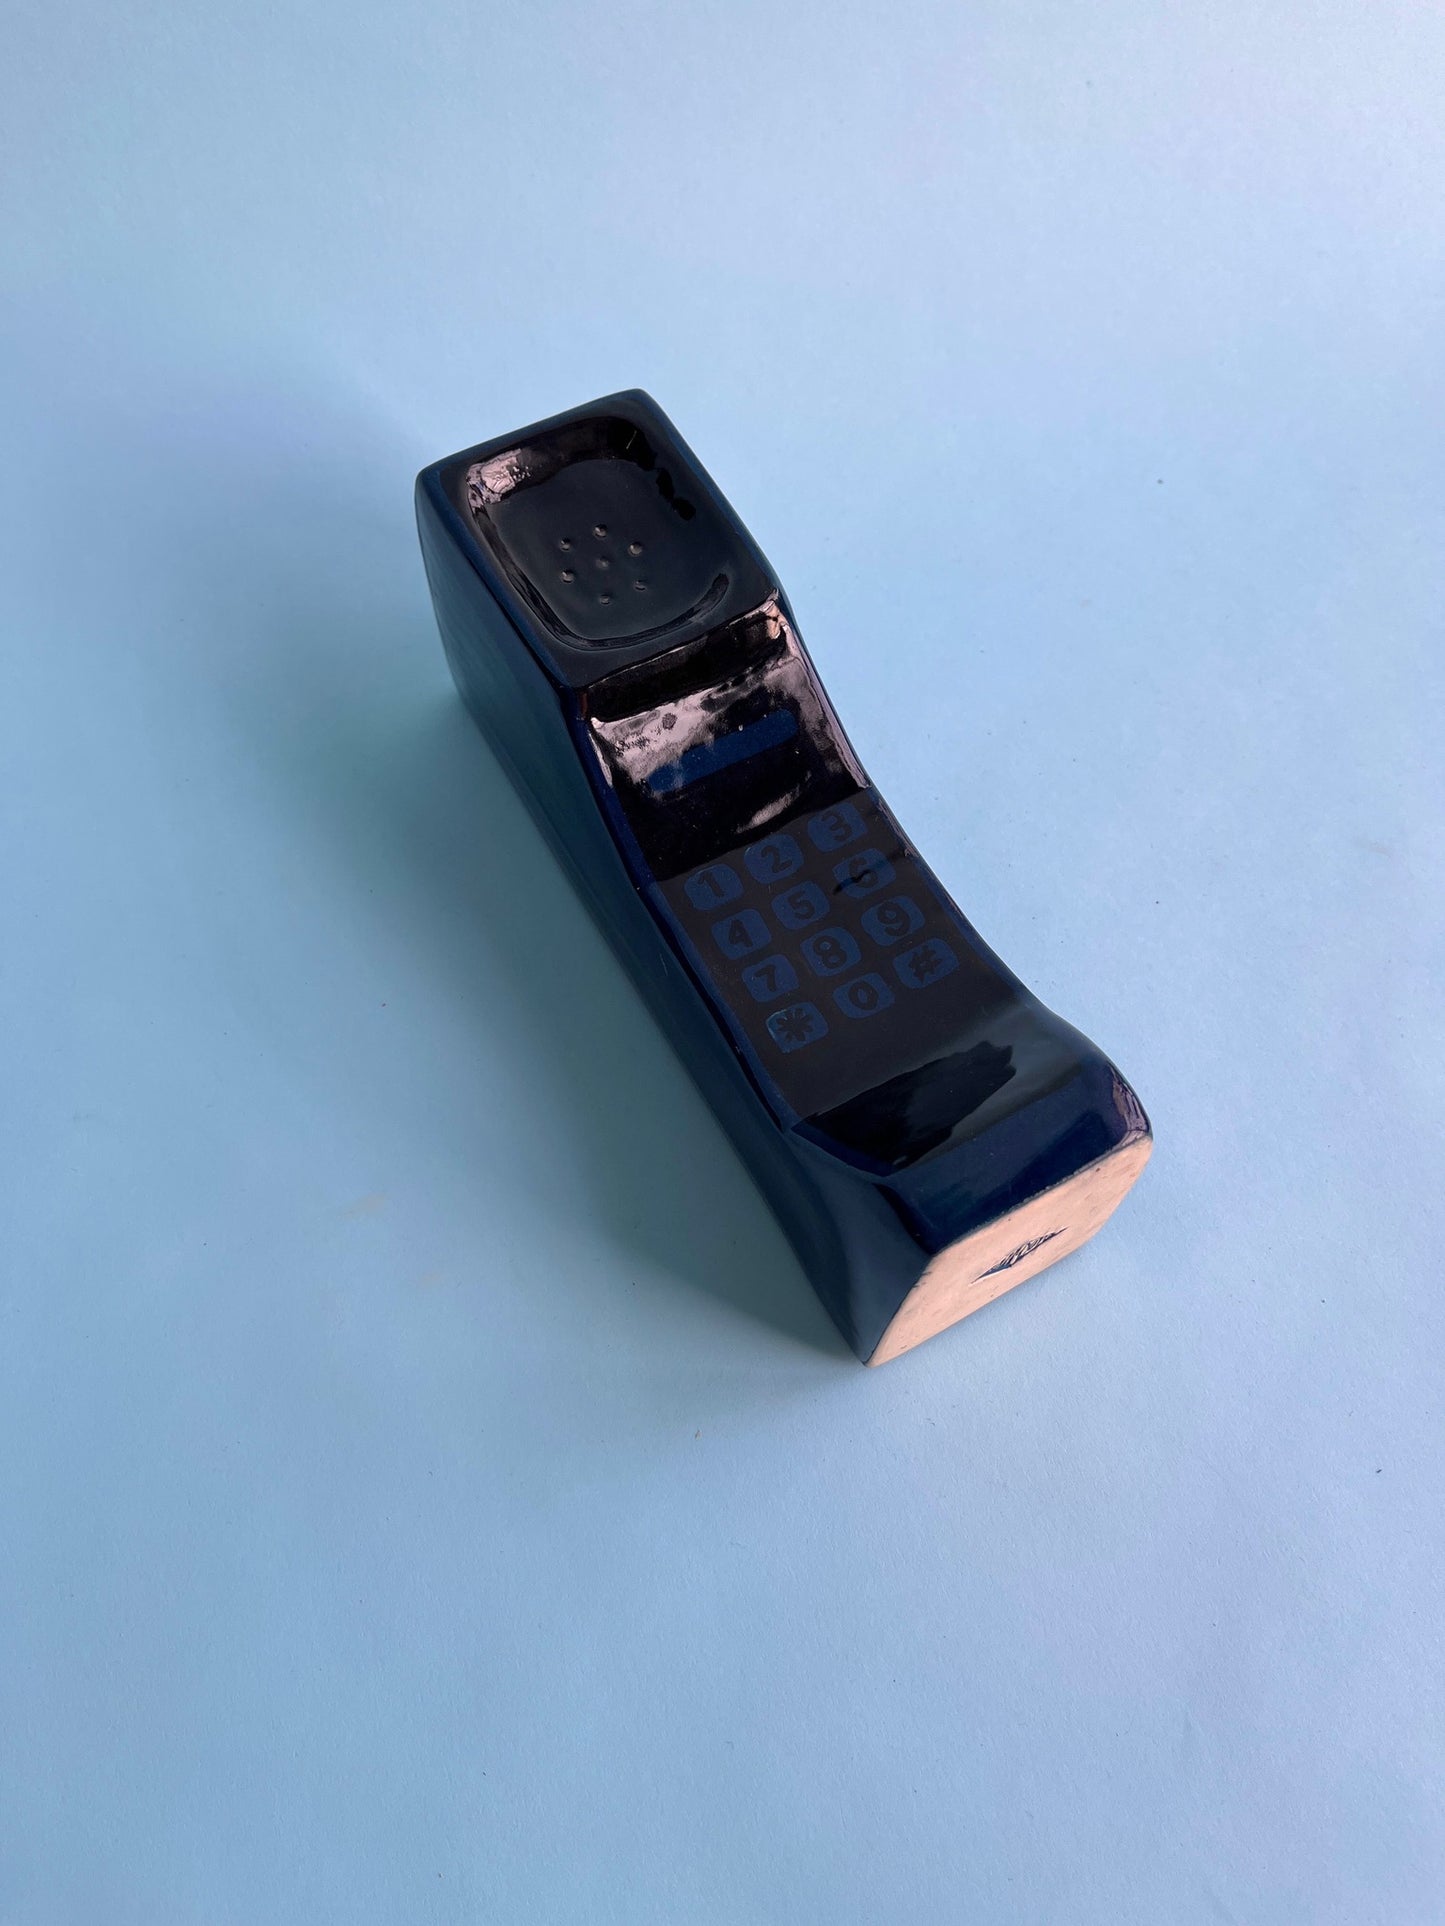 Seconds Sale: Dark Blue Brick Phone Incense Holder